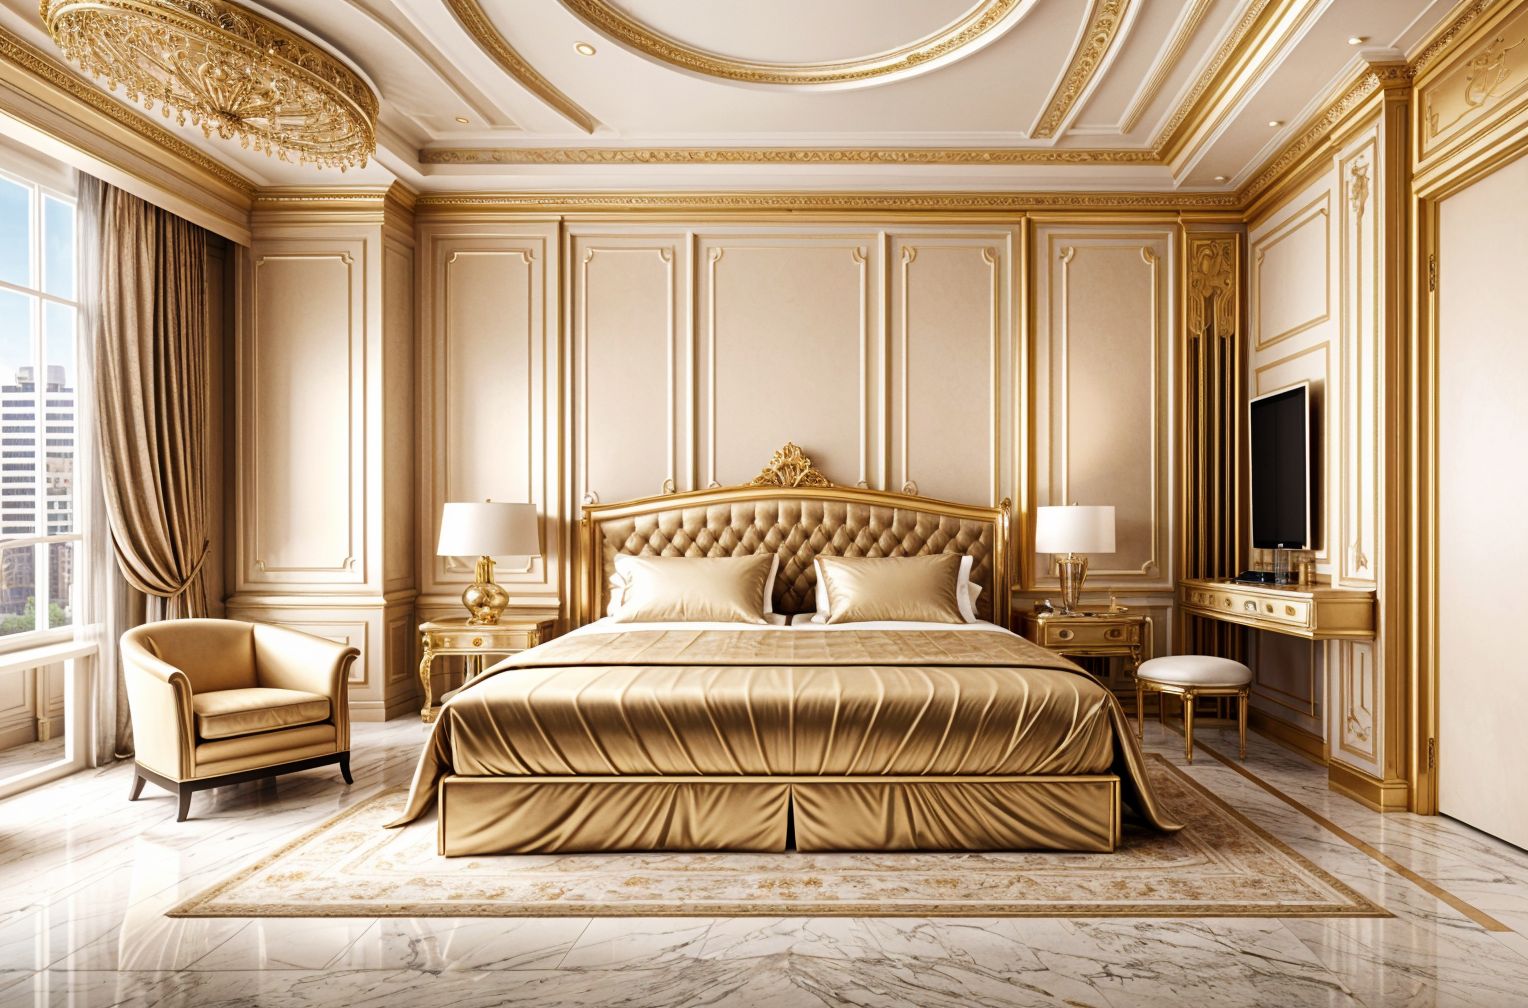 Luxurious Hotel Room